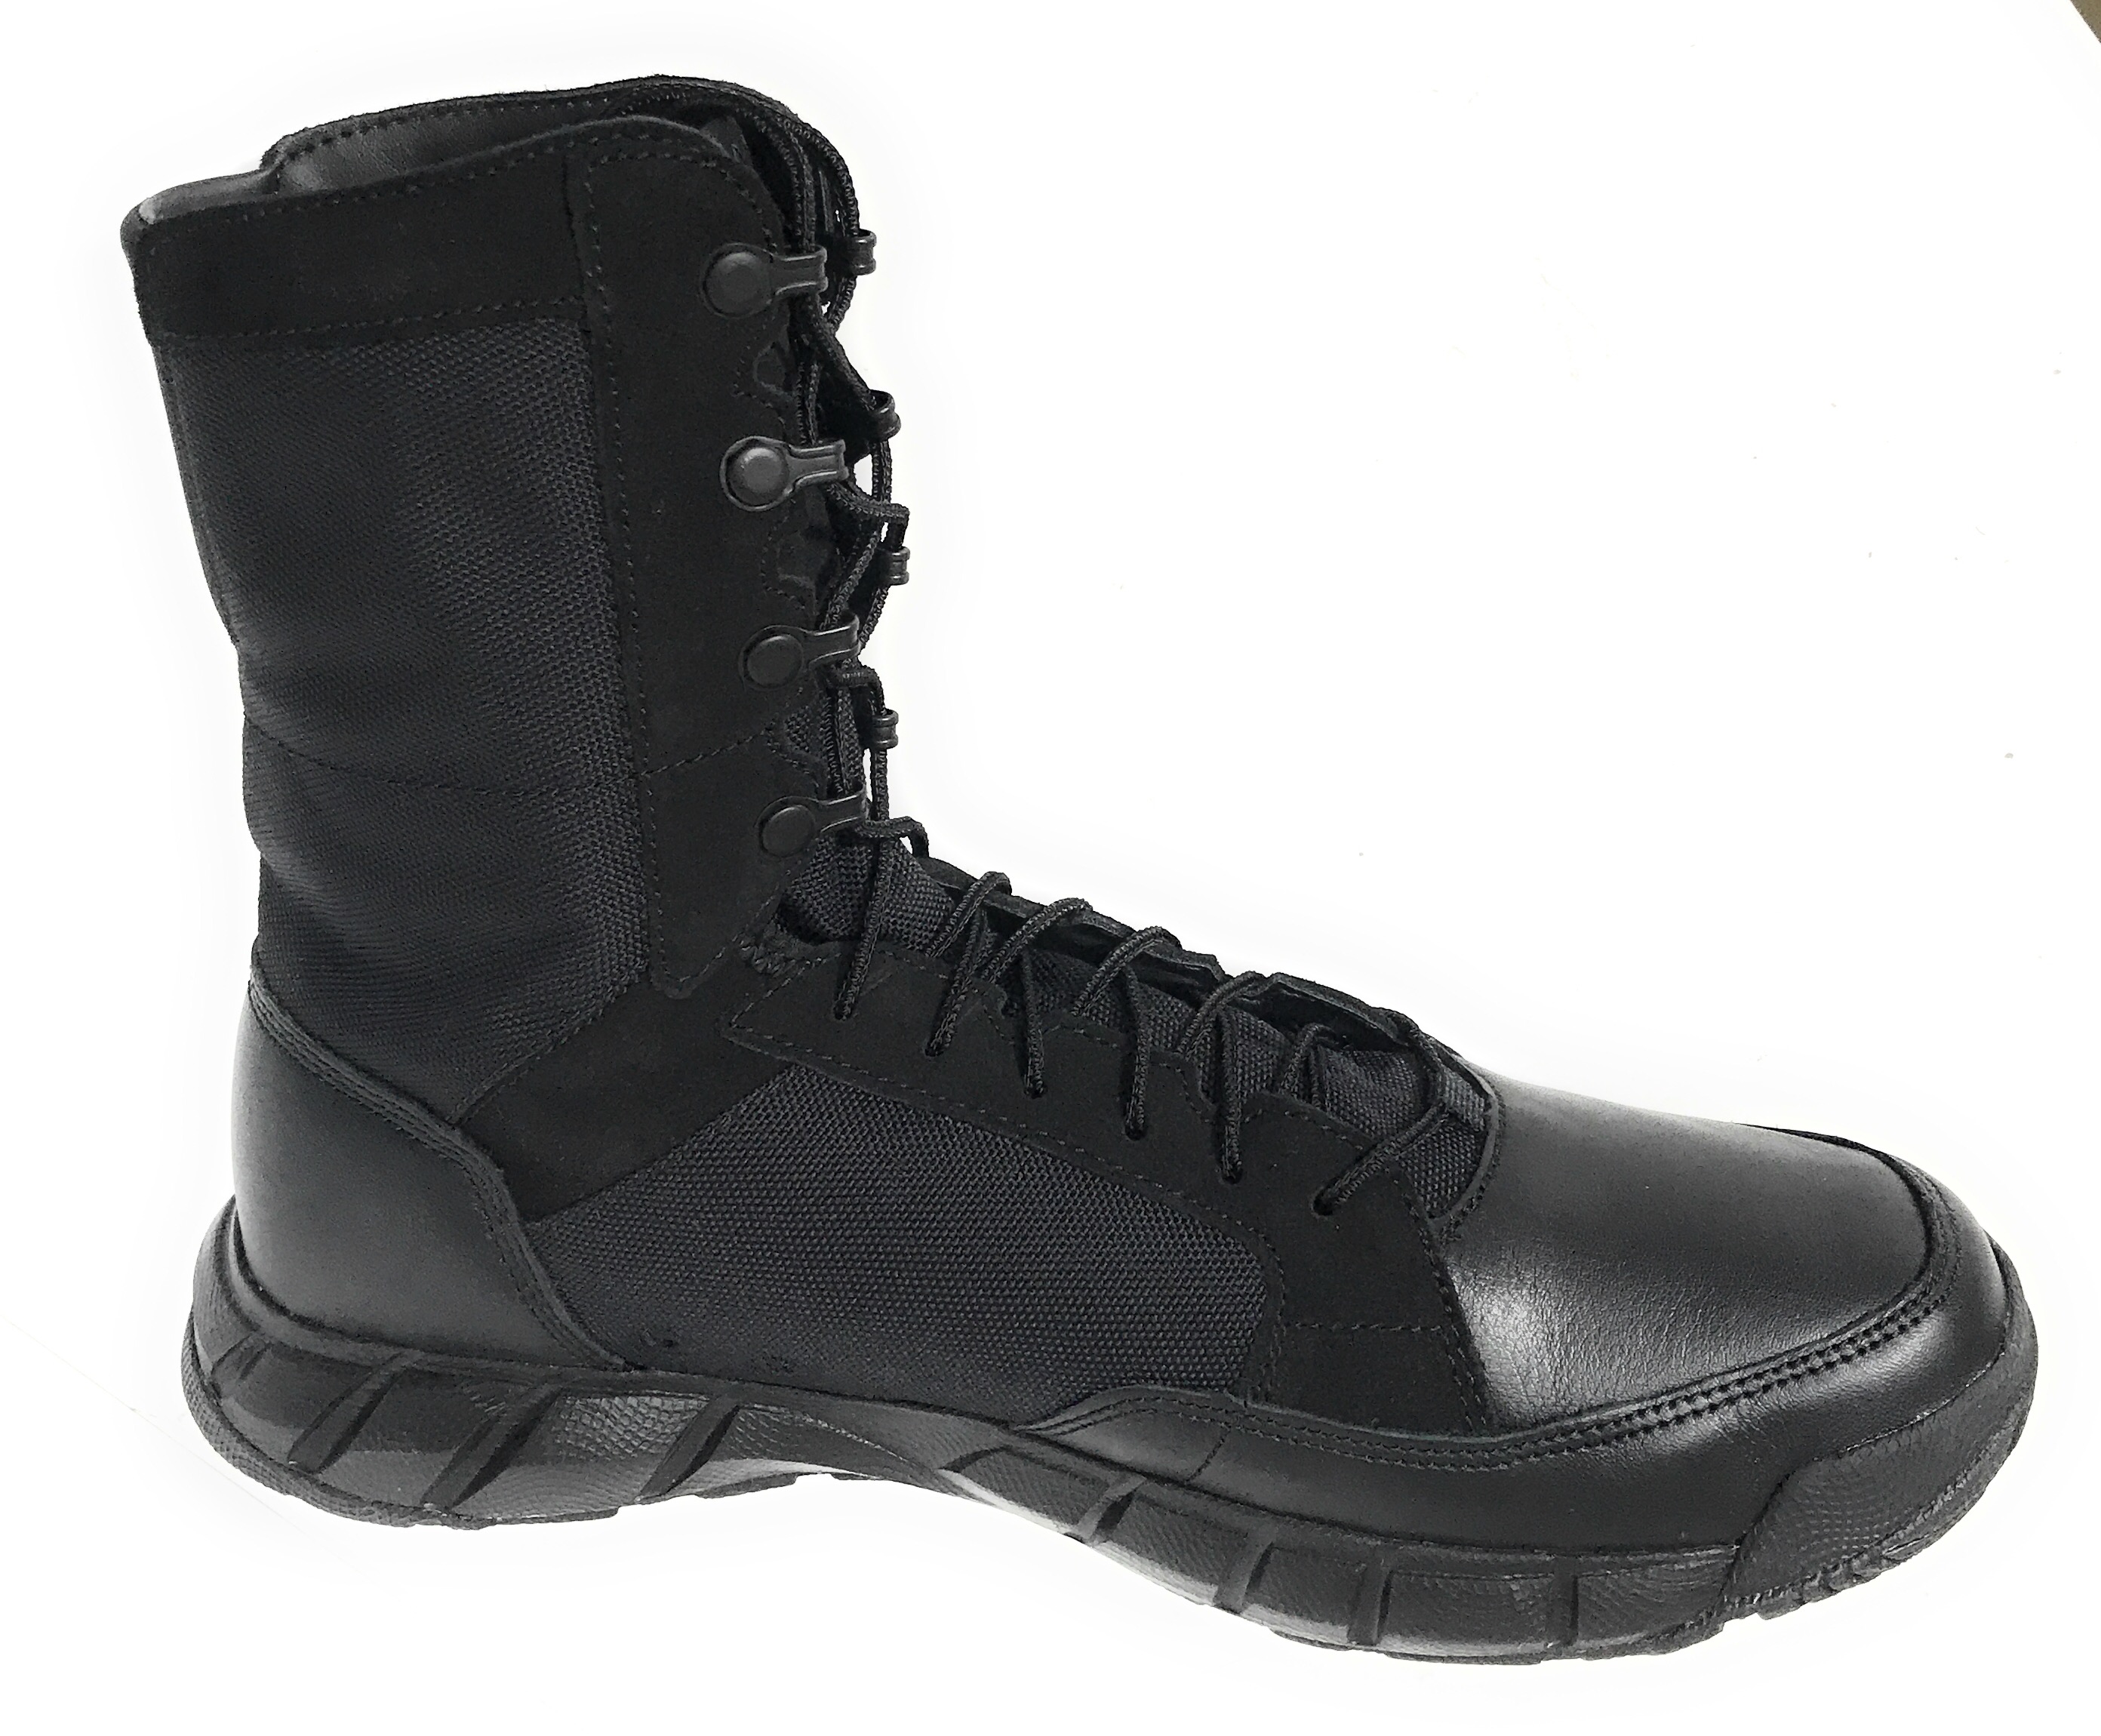 oakley men's si patrol boots